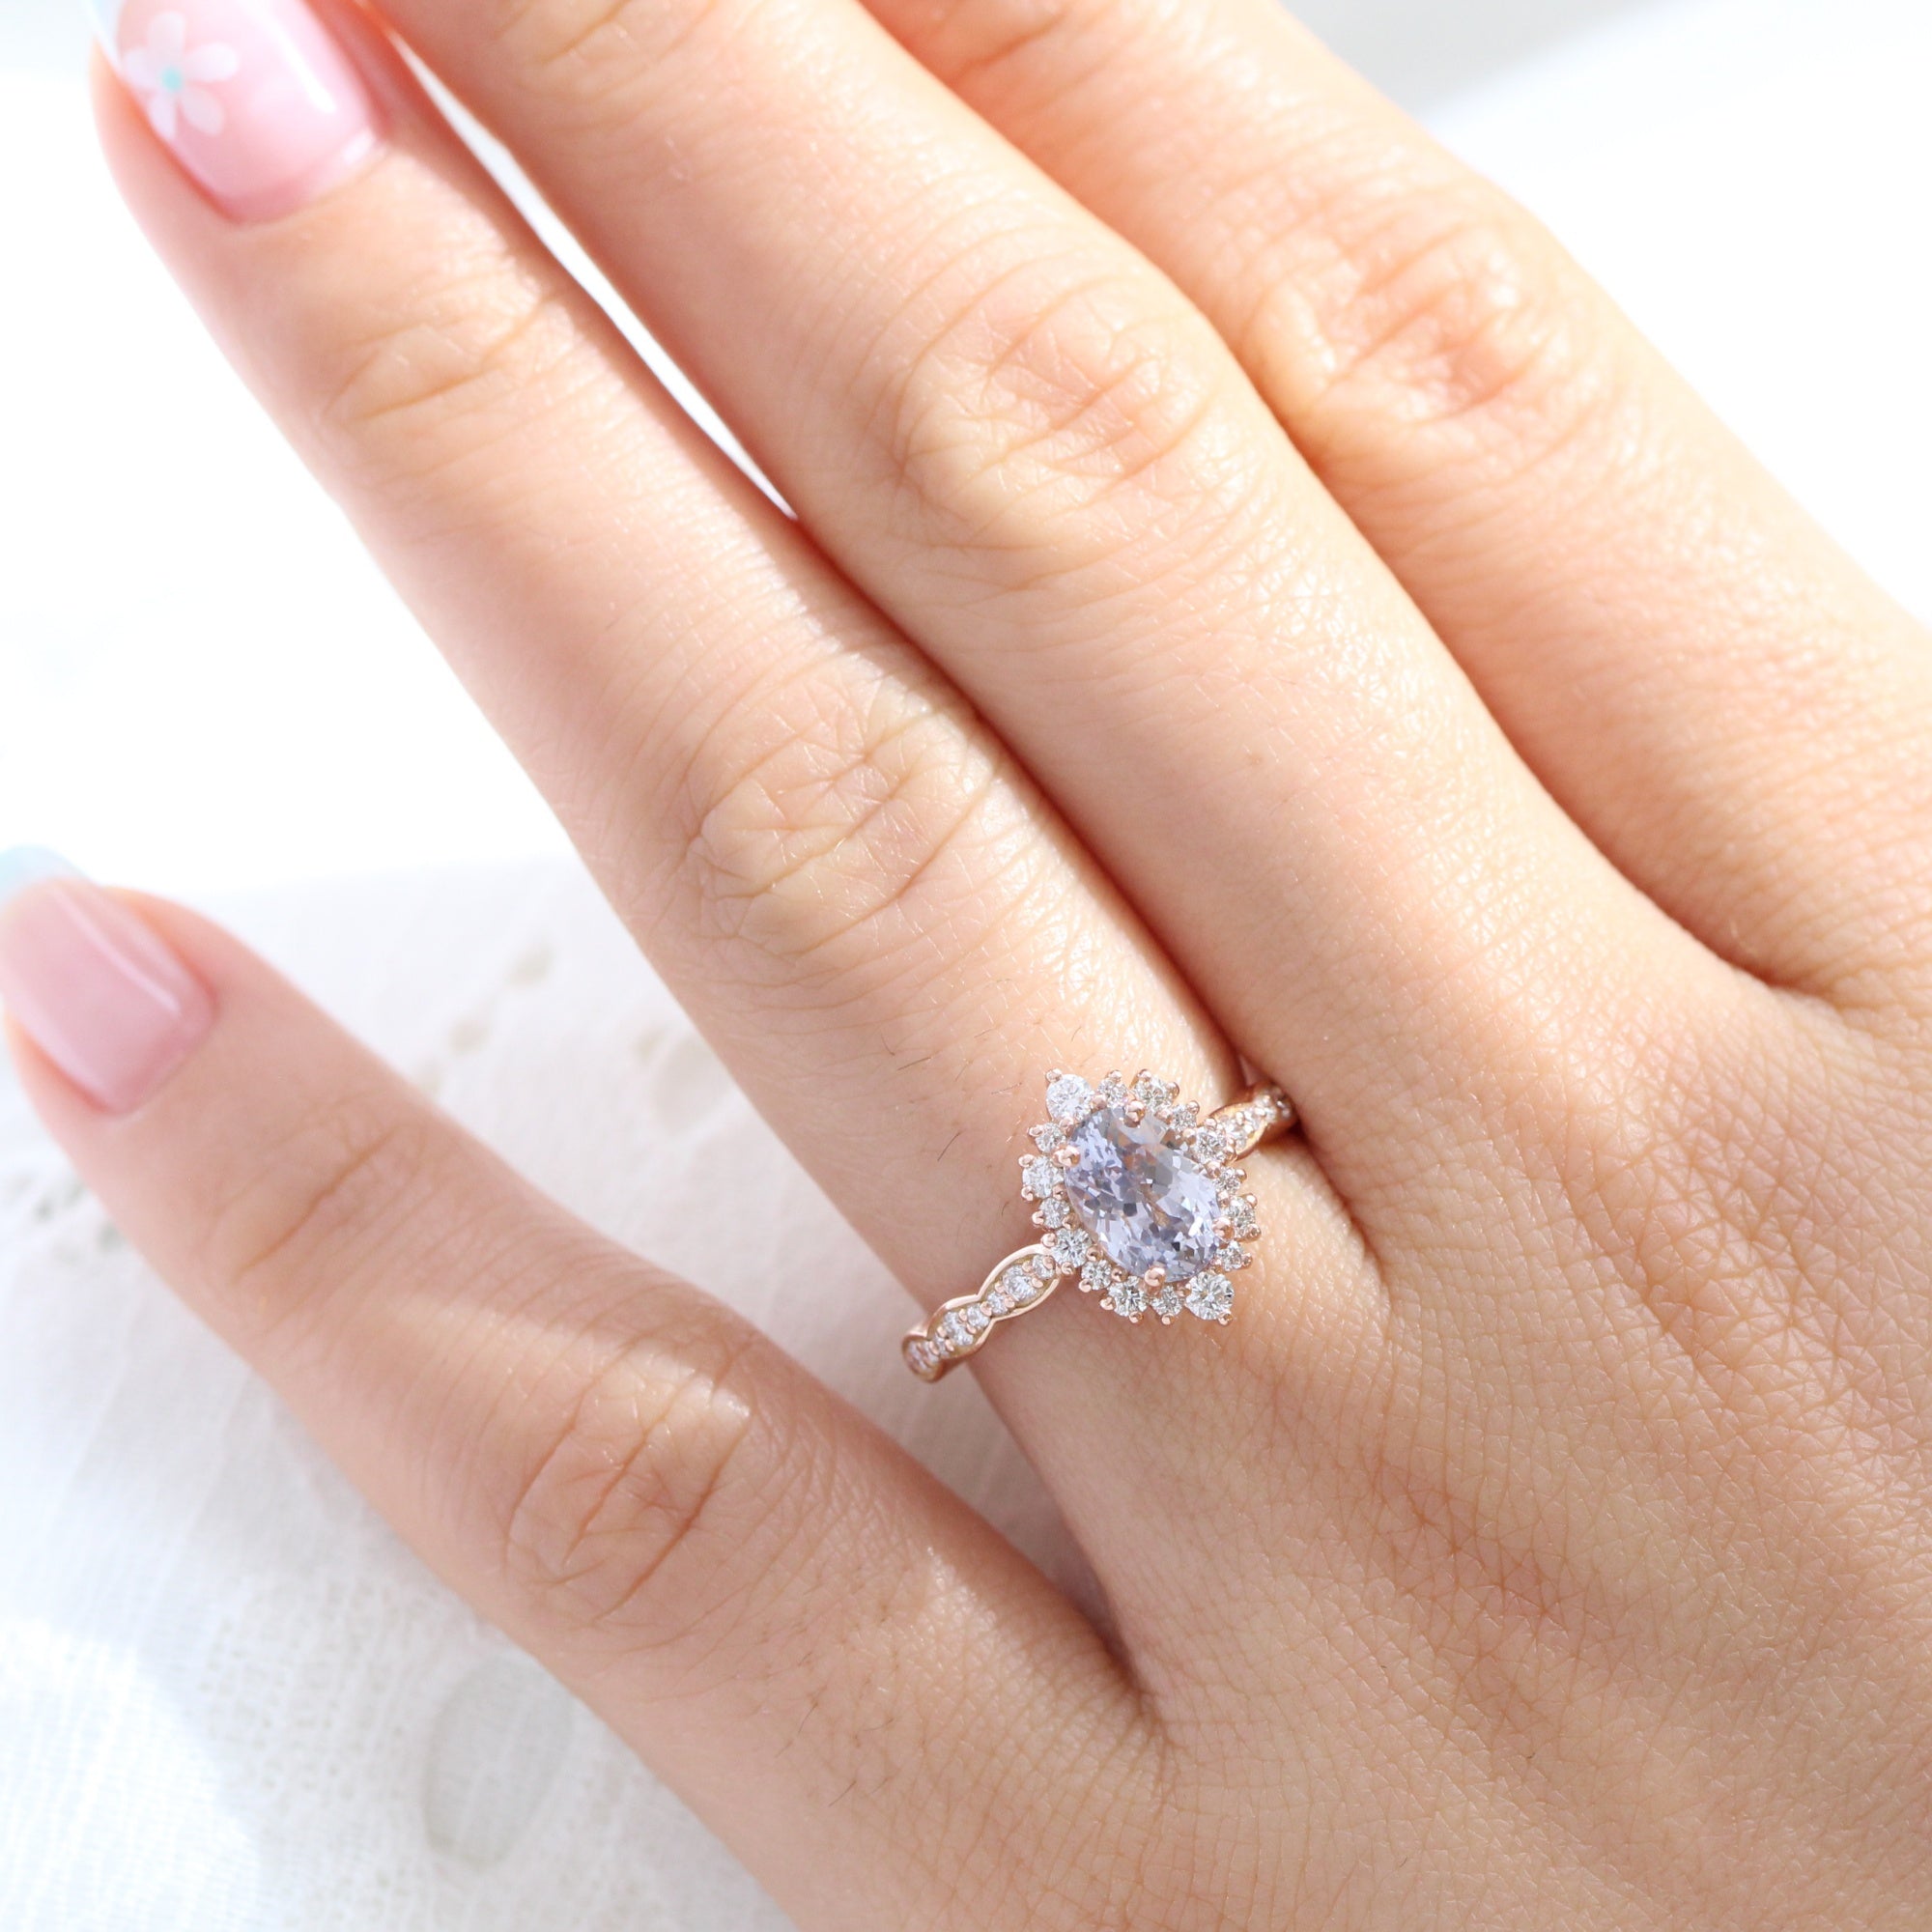 oval lavender sapphire ring rose gold halo diamond ring scalloped diamond band la more design jewelry